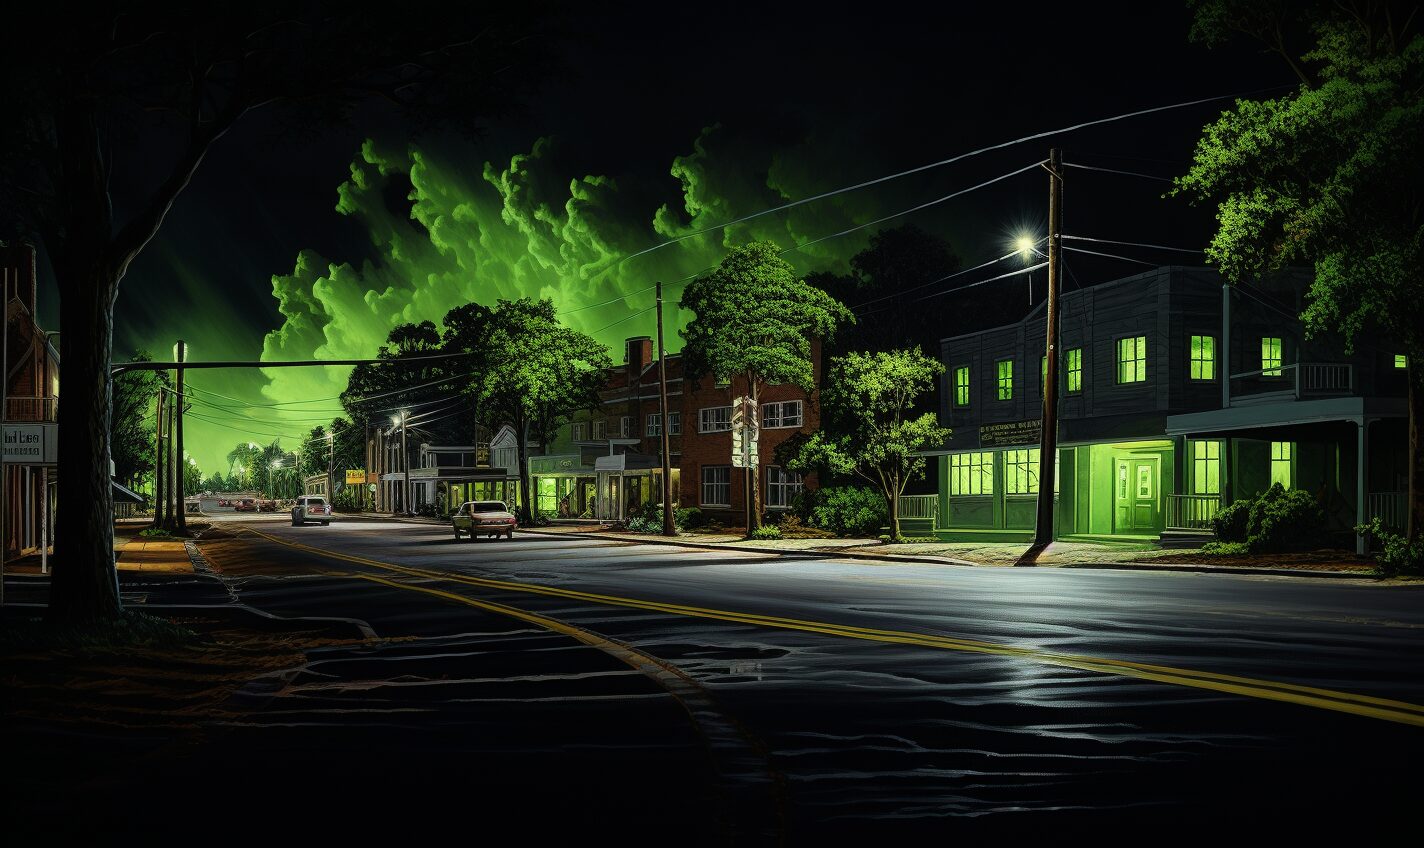 huntsville, alabama in a black and neon green glow